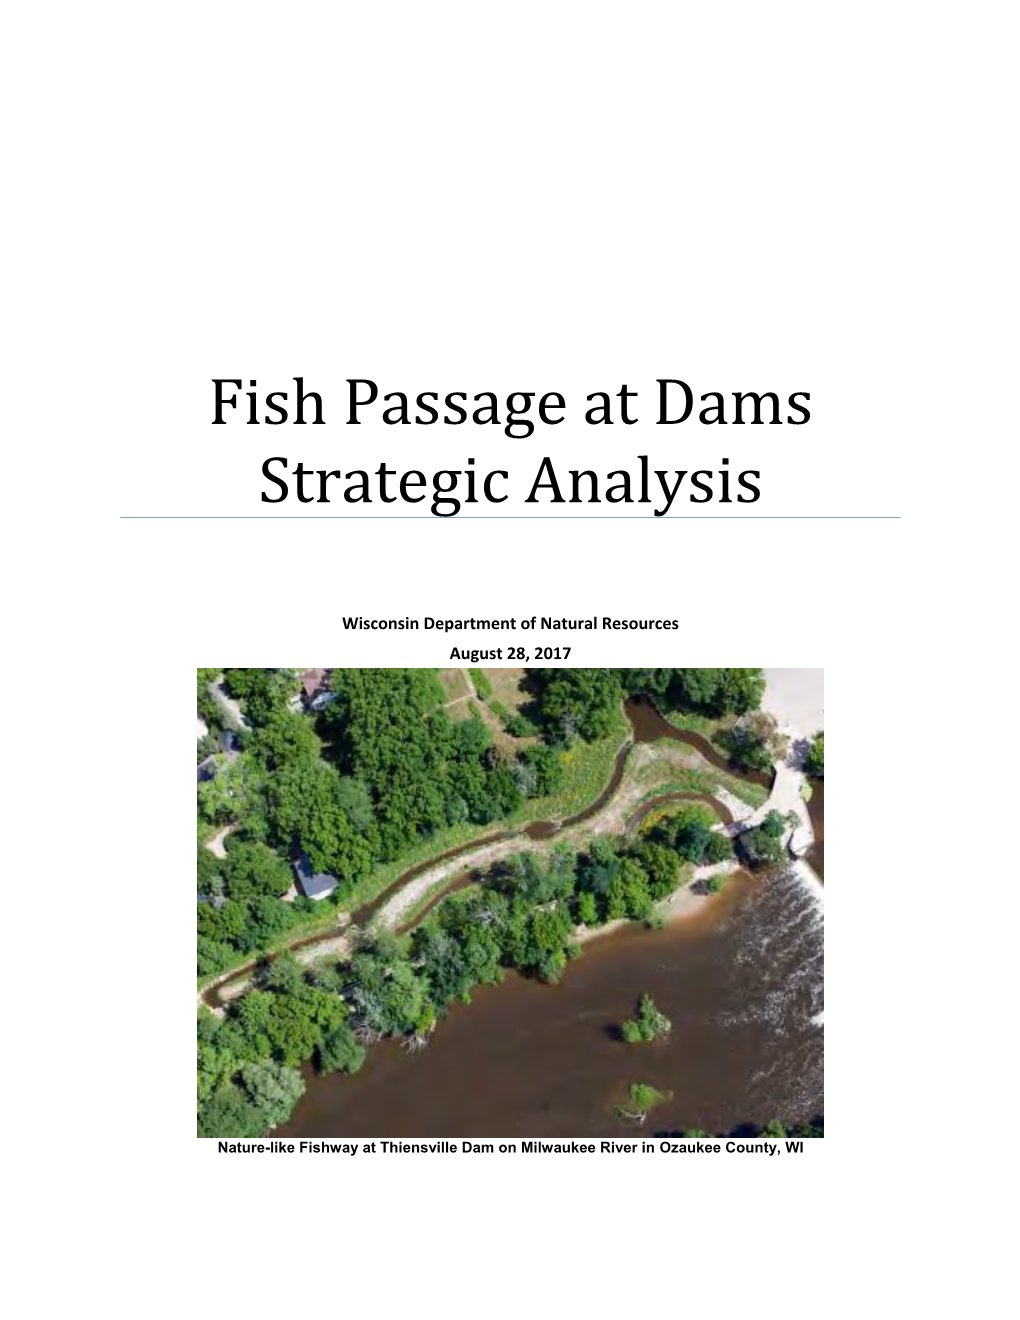 Fish Passage at Dams Strategic Analysis